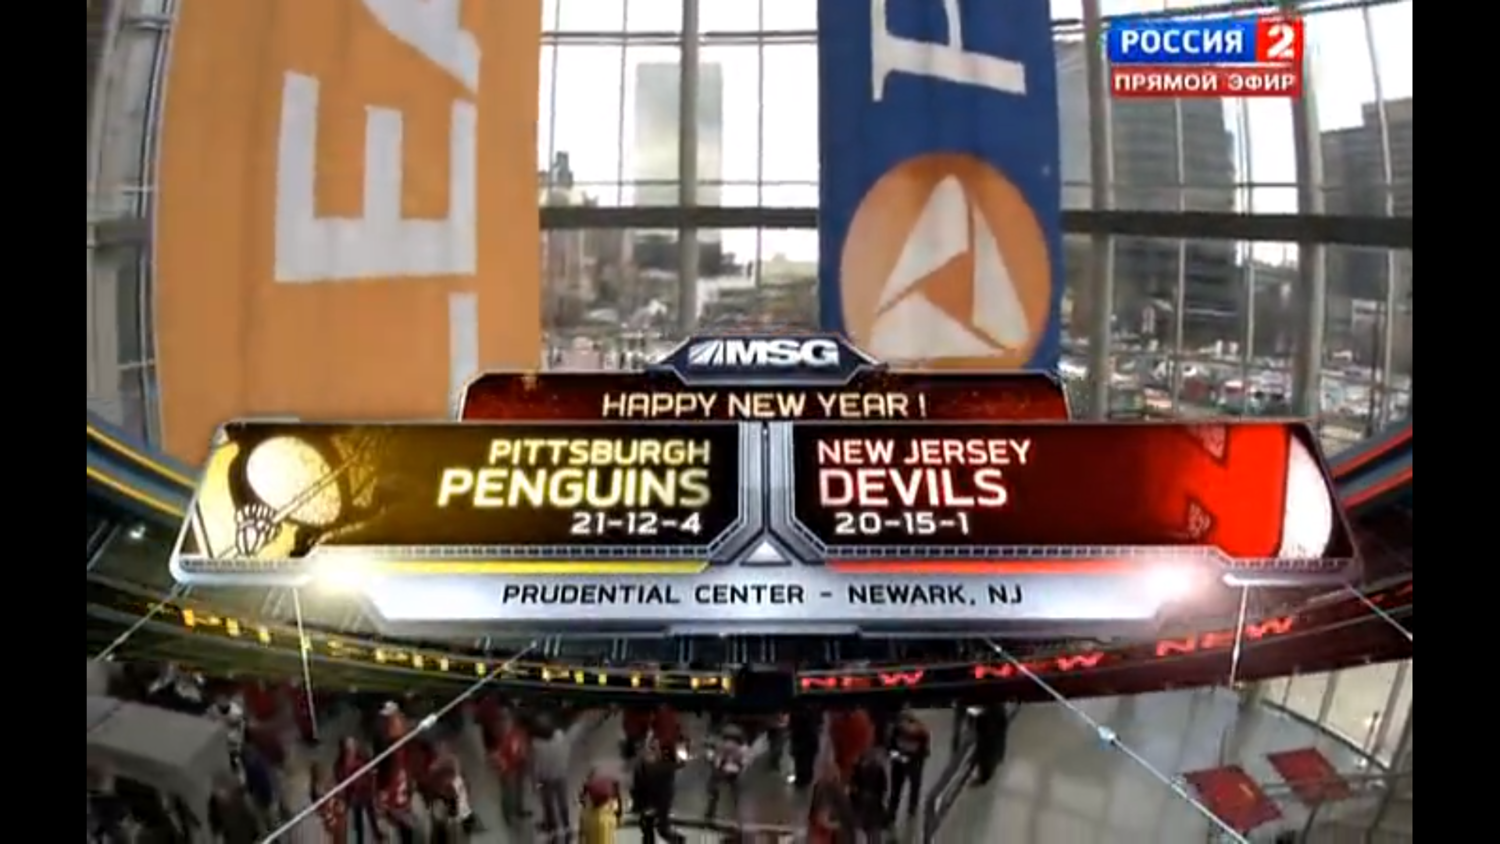 НХЛ 2011/2012. Регулярный сезон. Питтсбург Пингвинс - Нью-Джерси Дэвилс (31.12.2011)